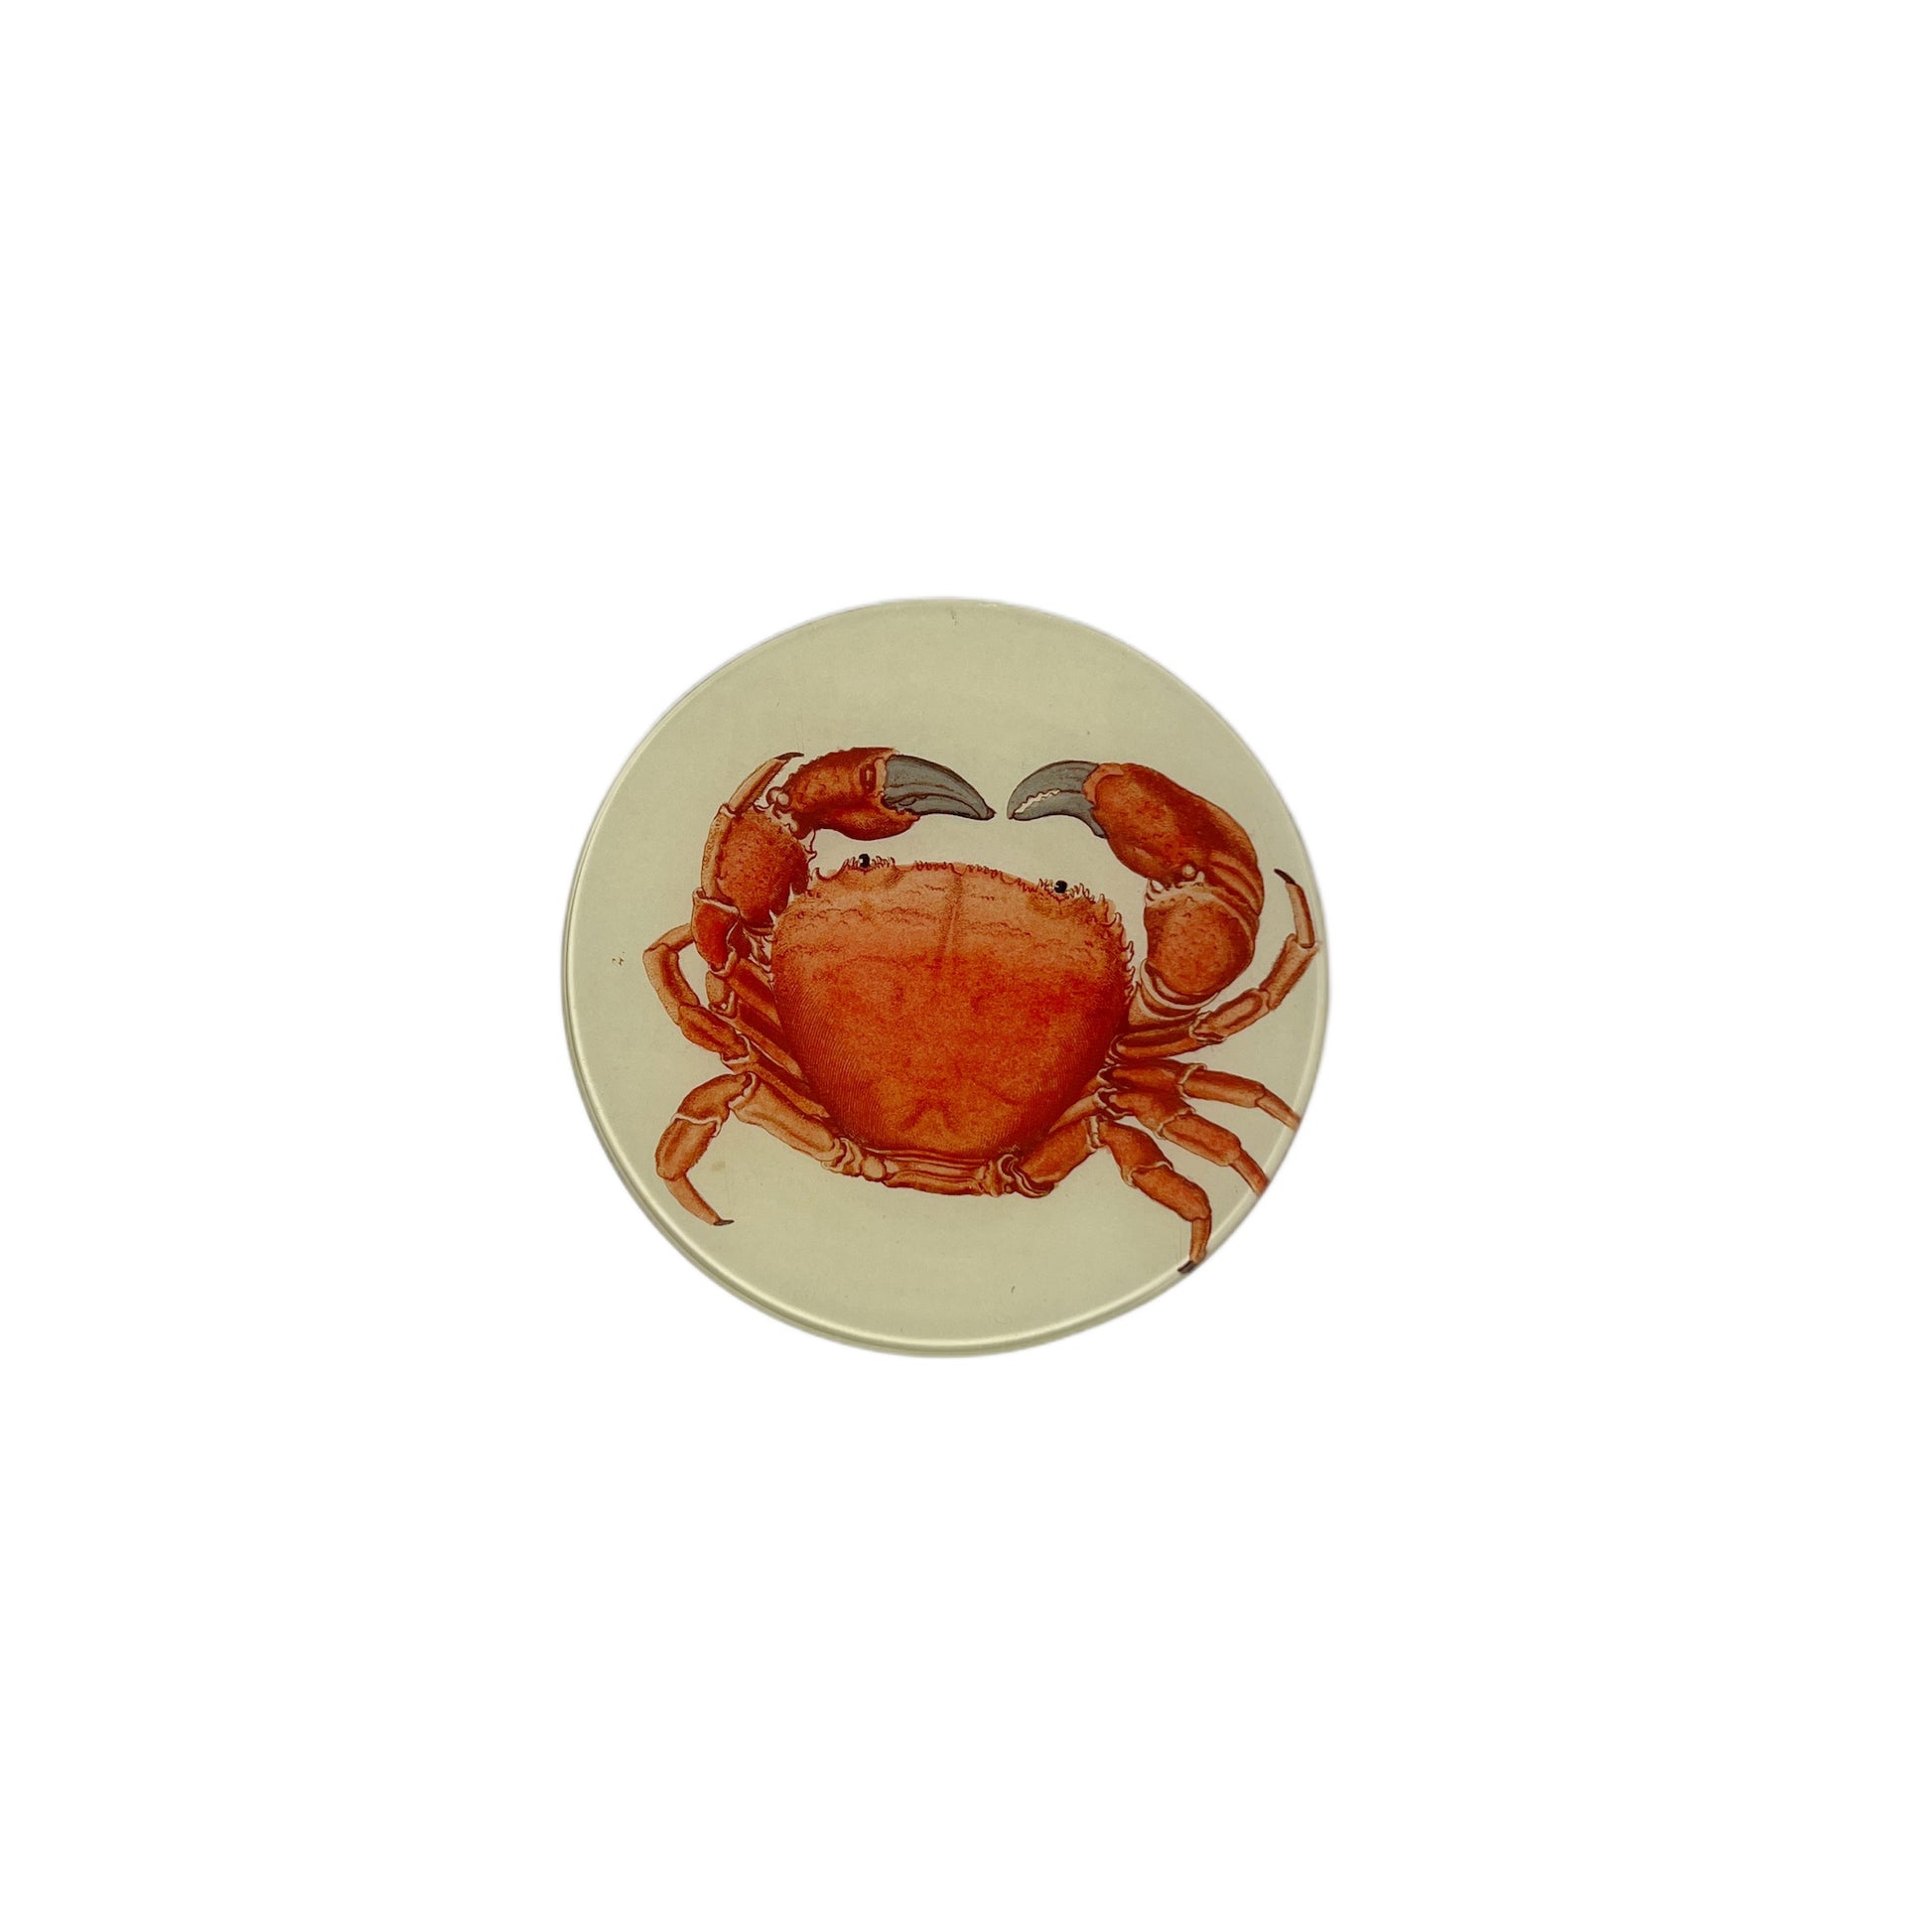 【JOHN DERIAN】デコパージュプレート Red Crab